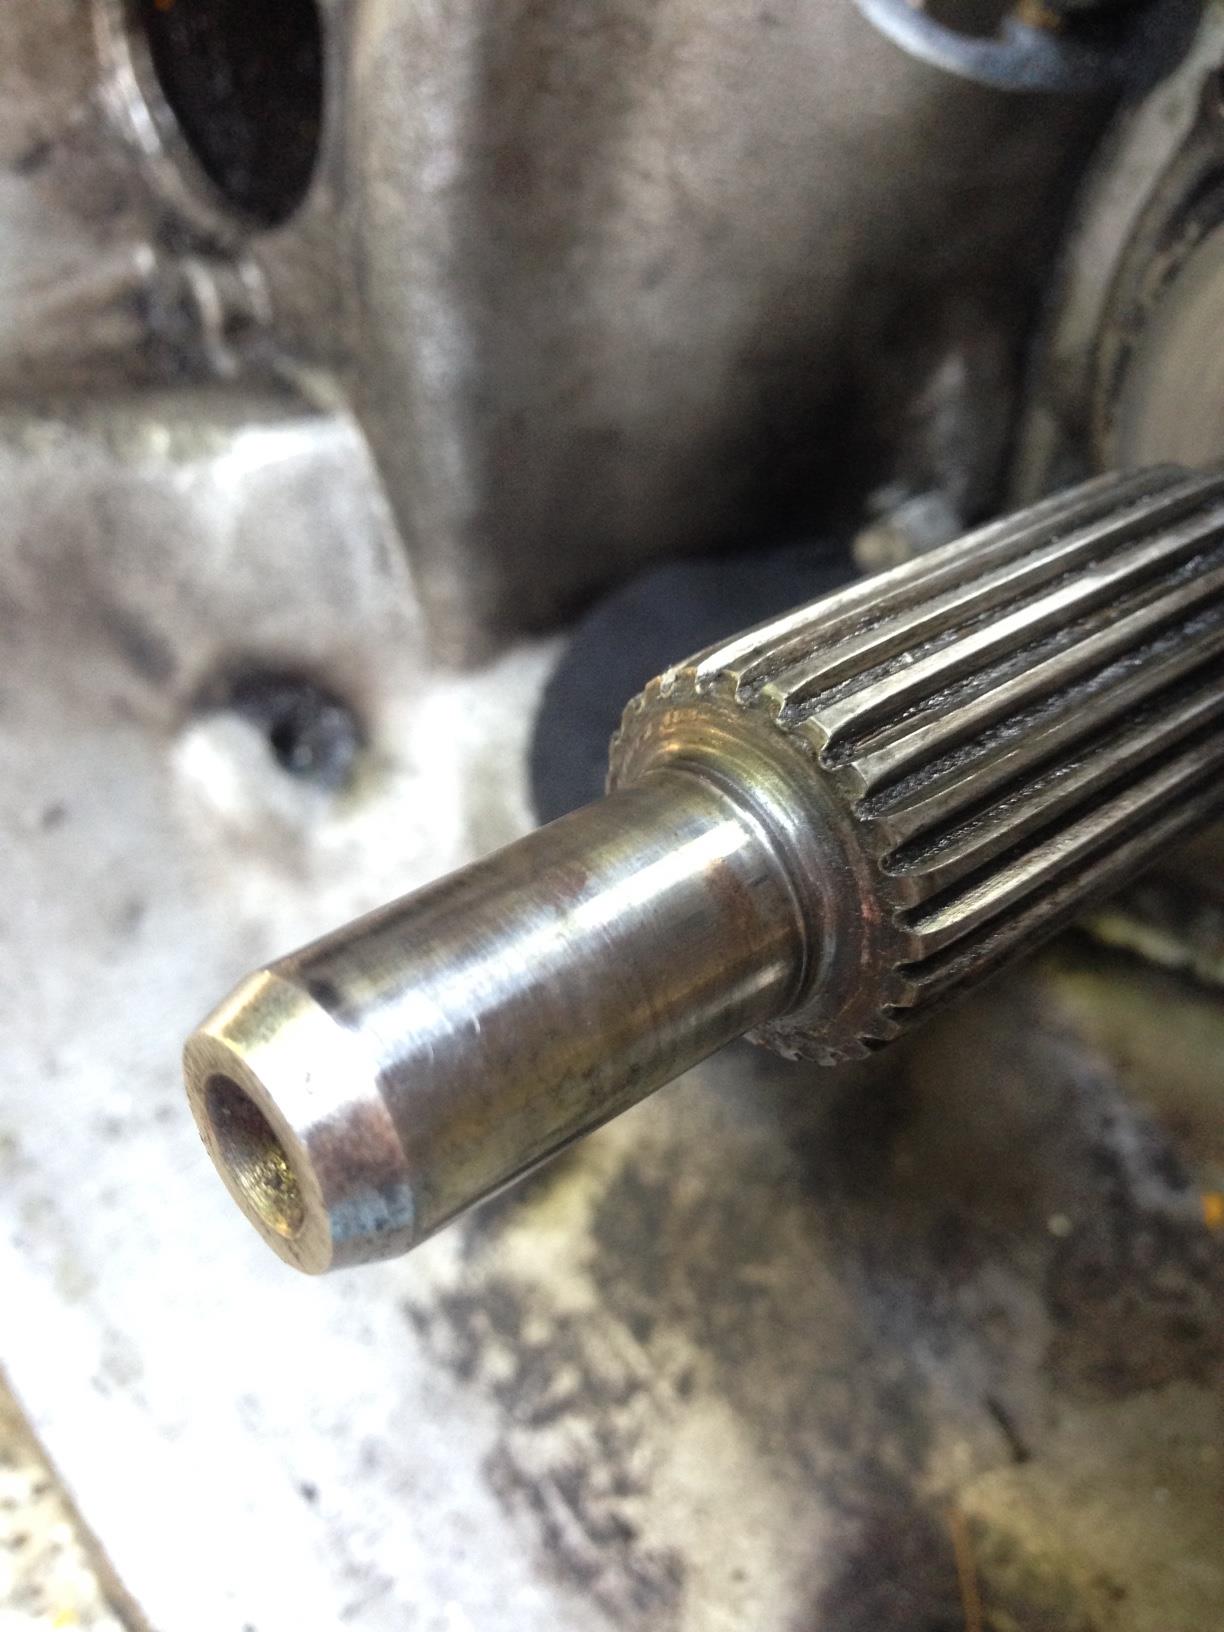 main shaft of gearbox, splines appear slightly burred